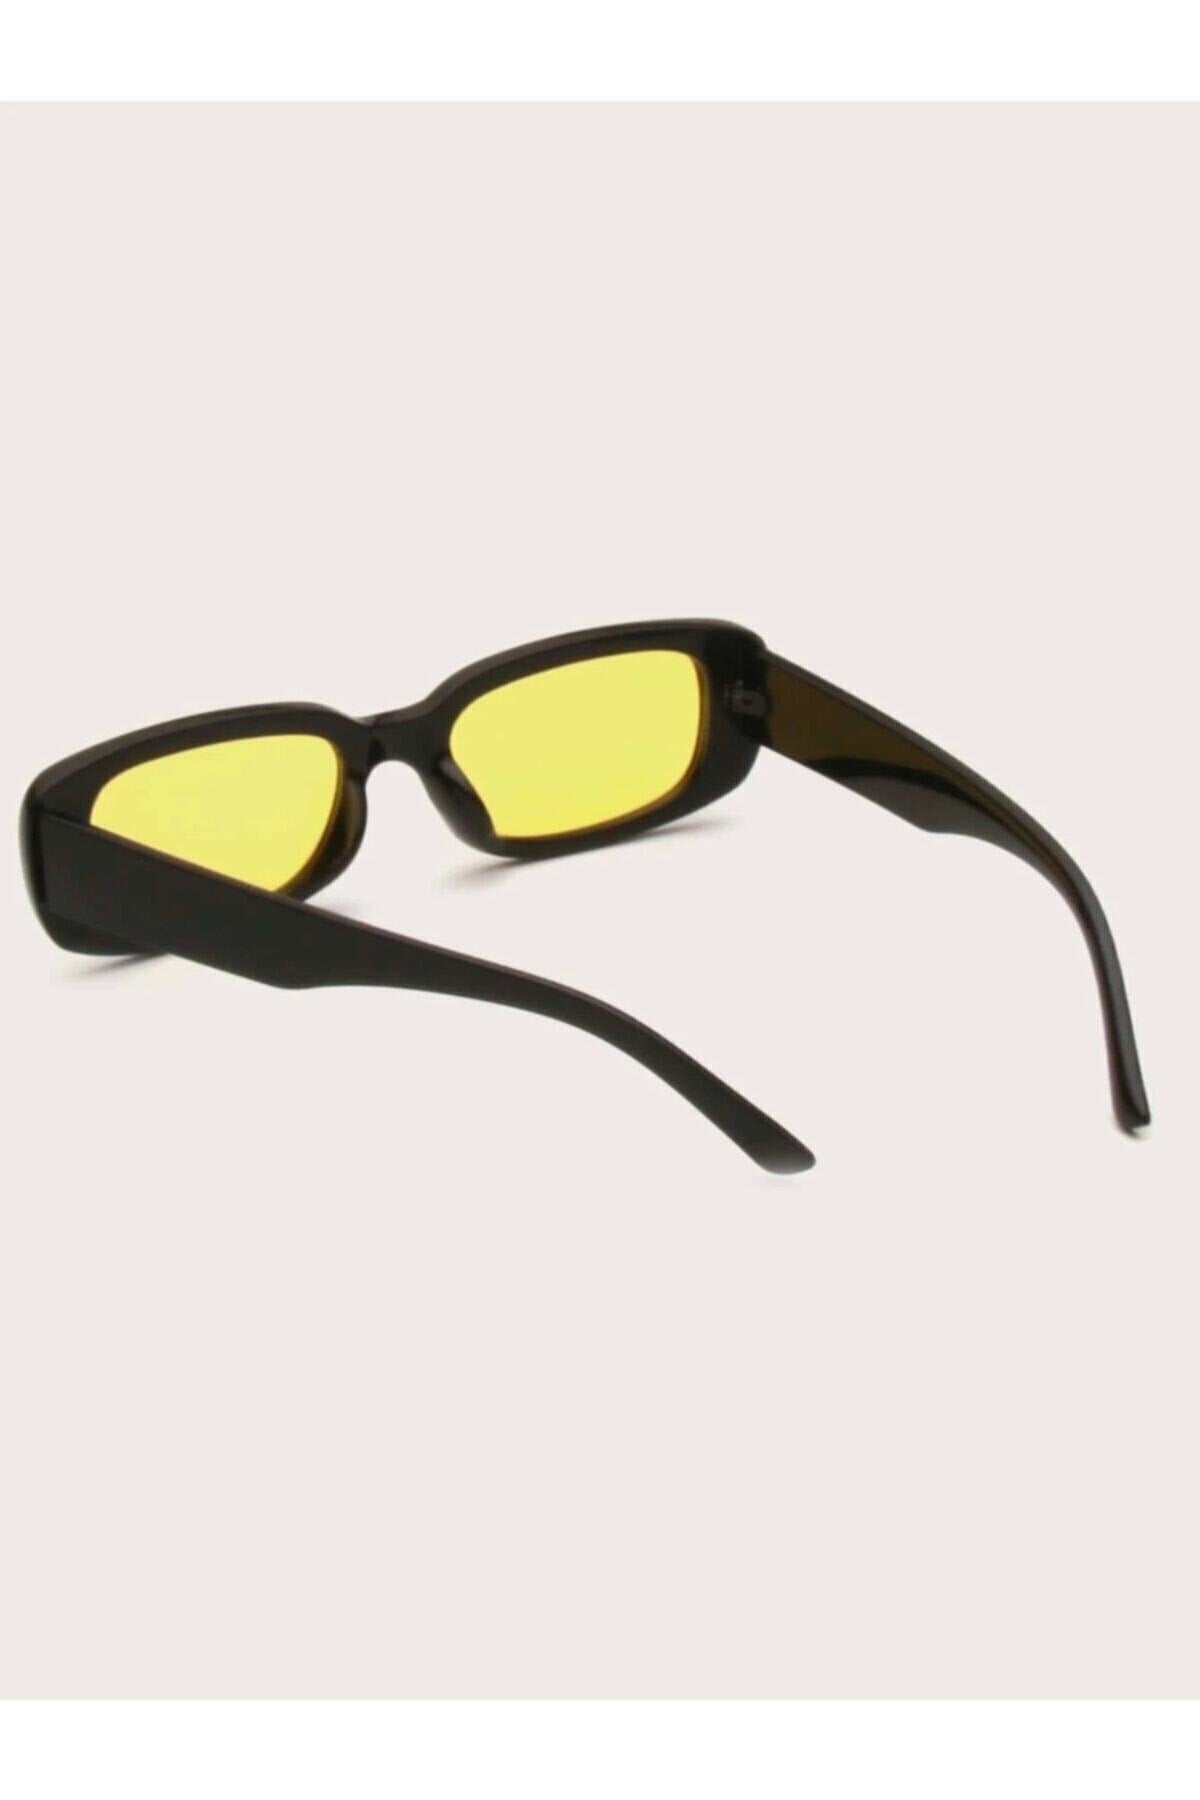 Chunky Frame Vintage Yellow Black Sunglasses